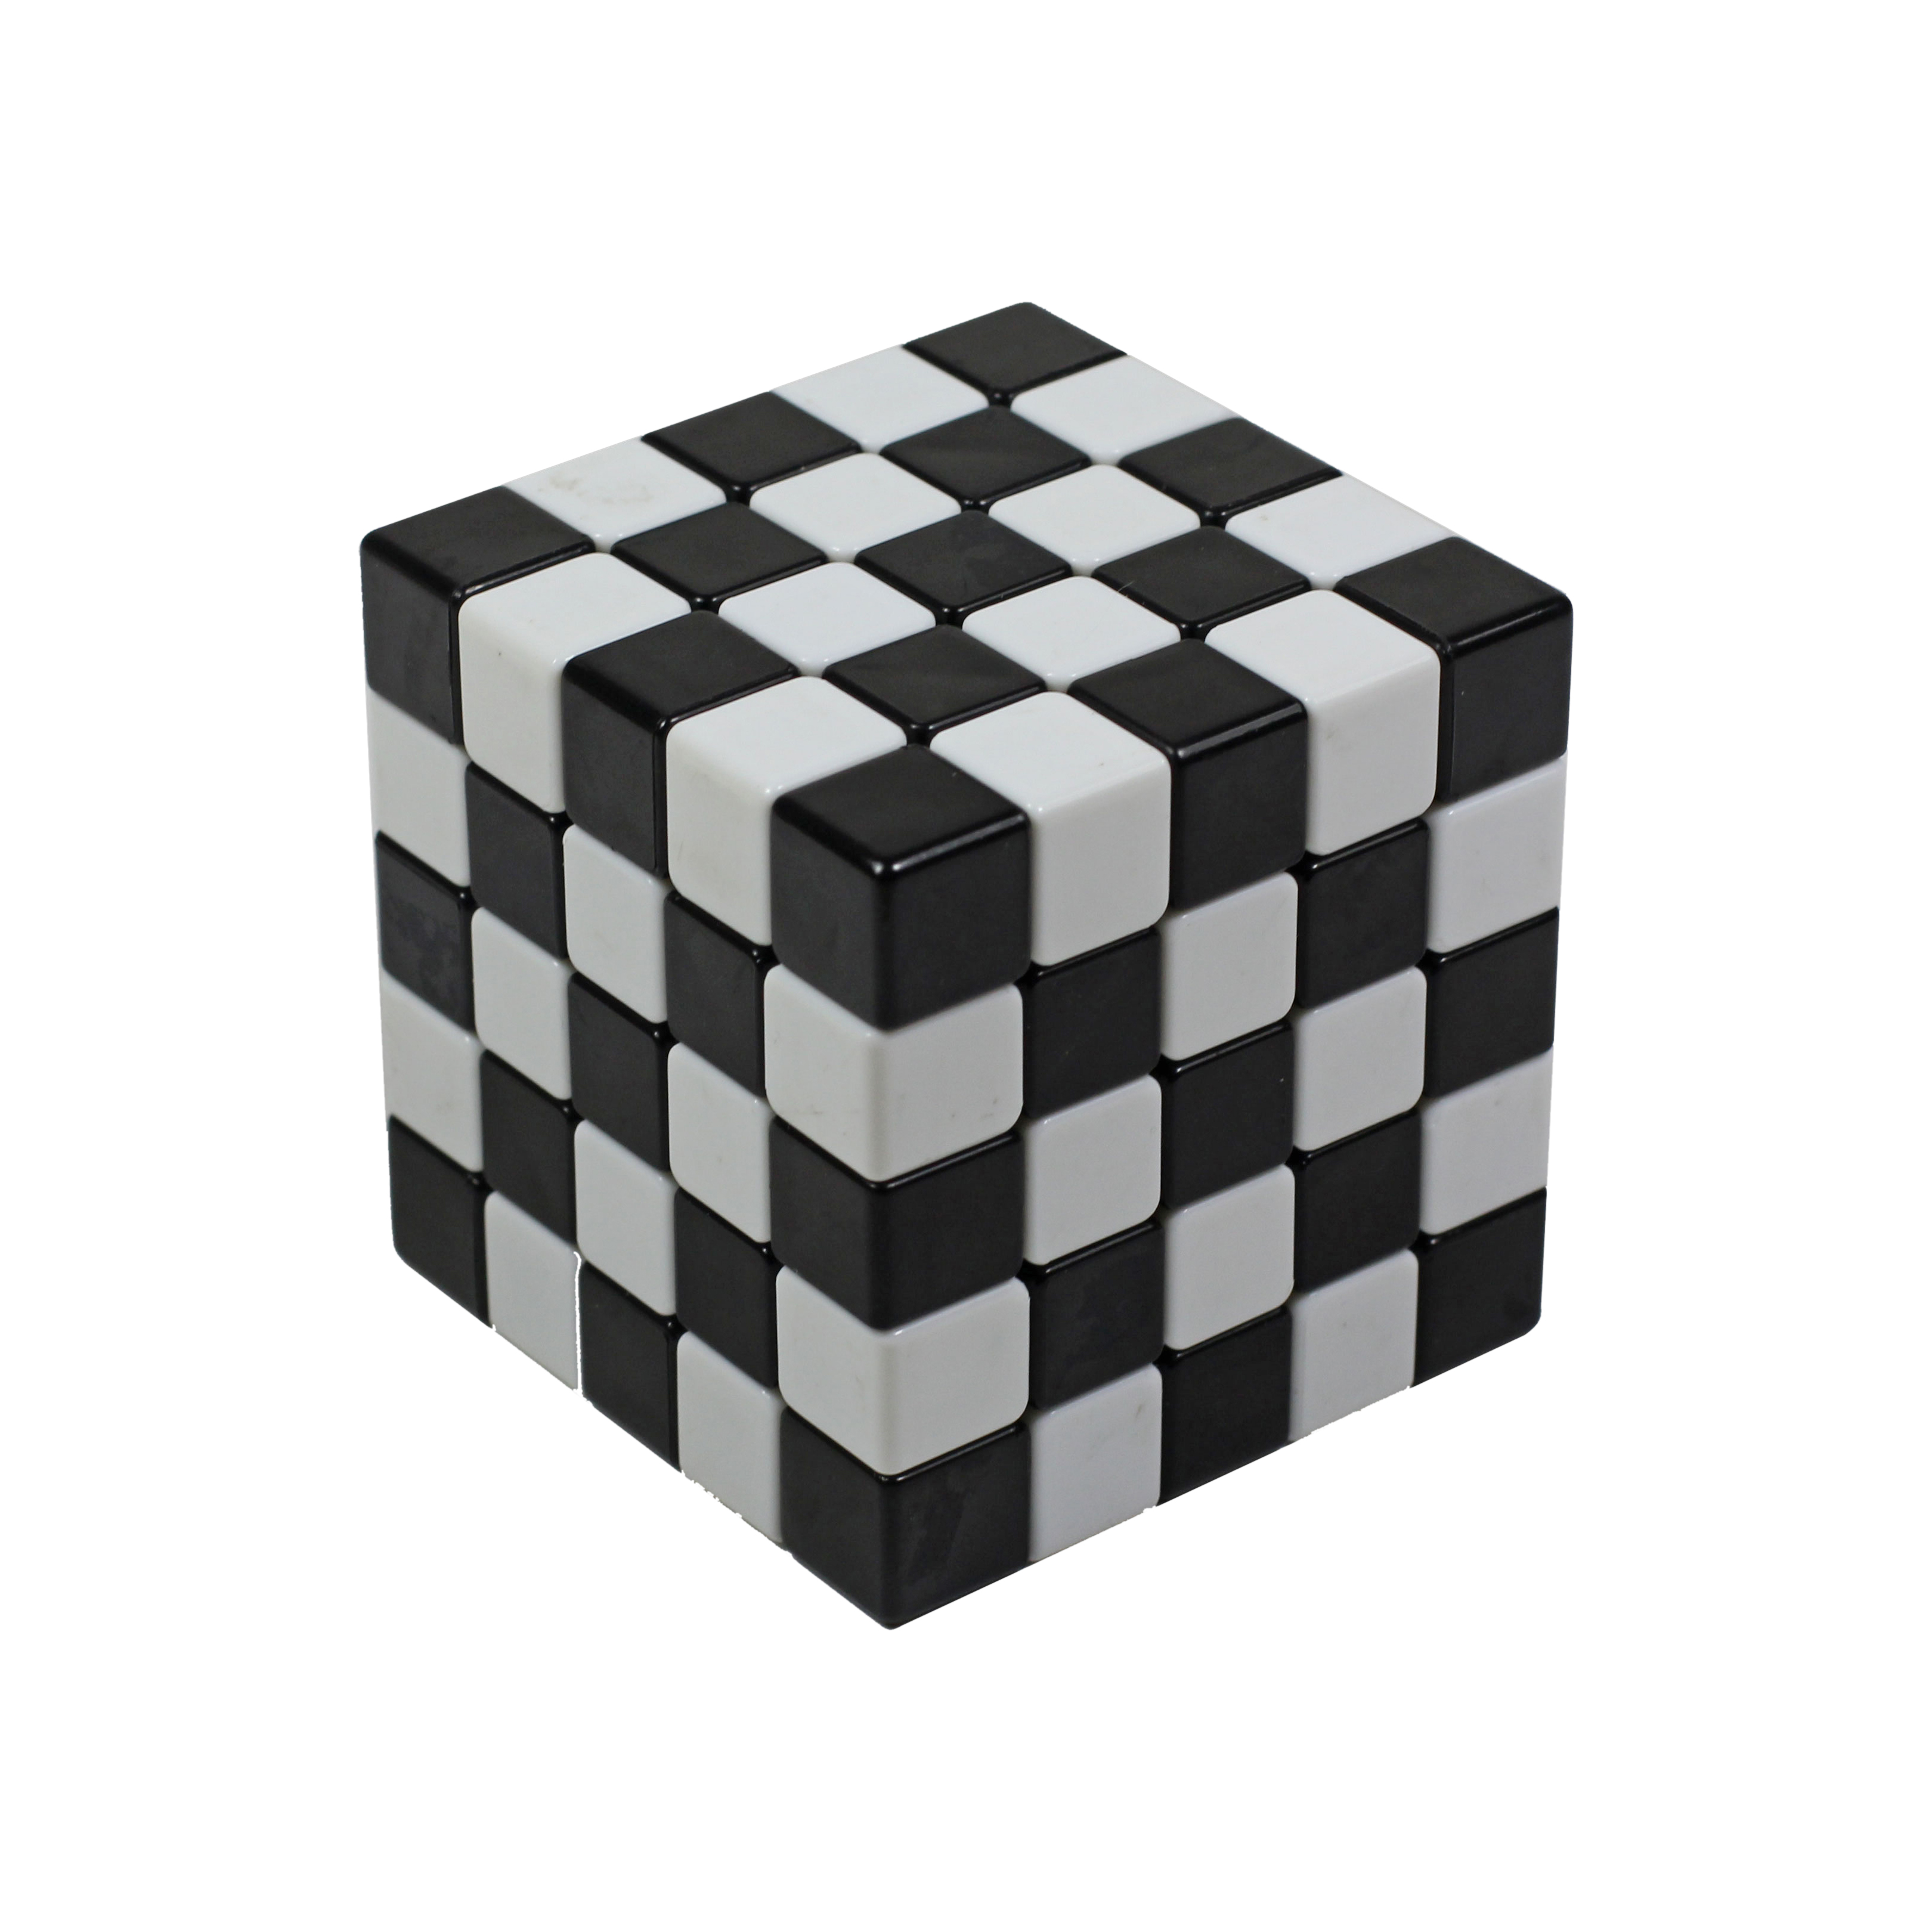 Chessboard 5x5 Magic Cube